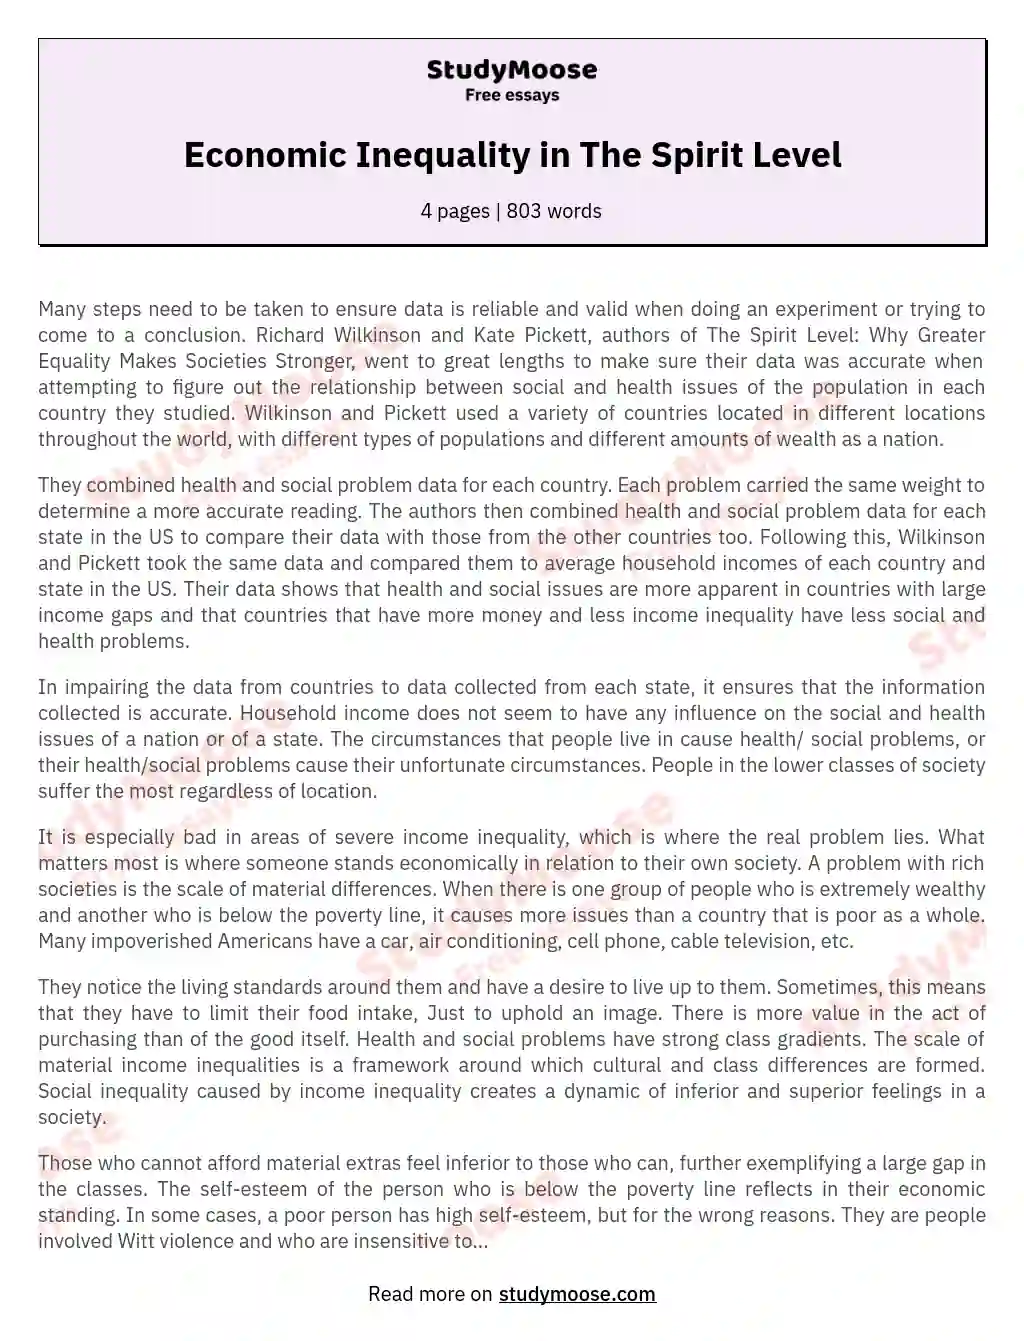 Economic Inequality in The Spirit Level essay